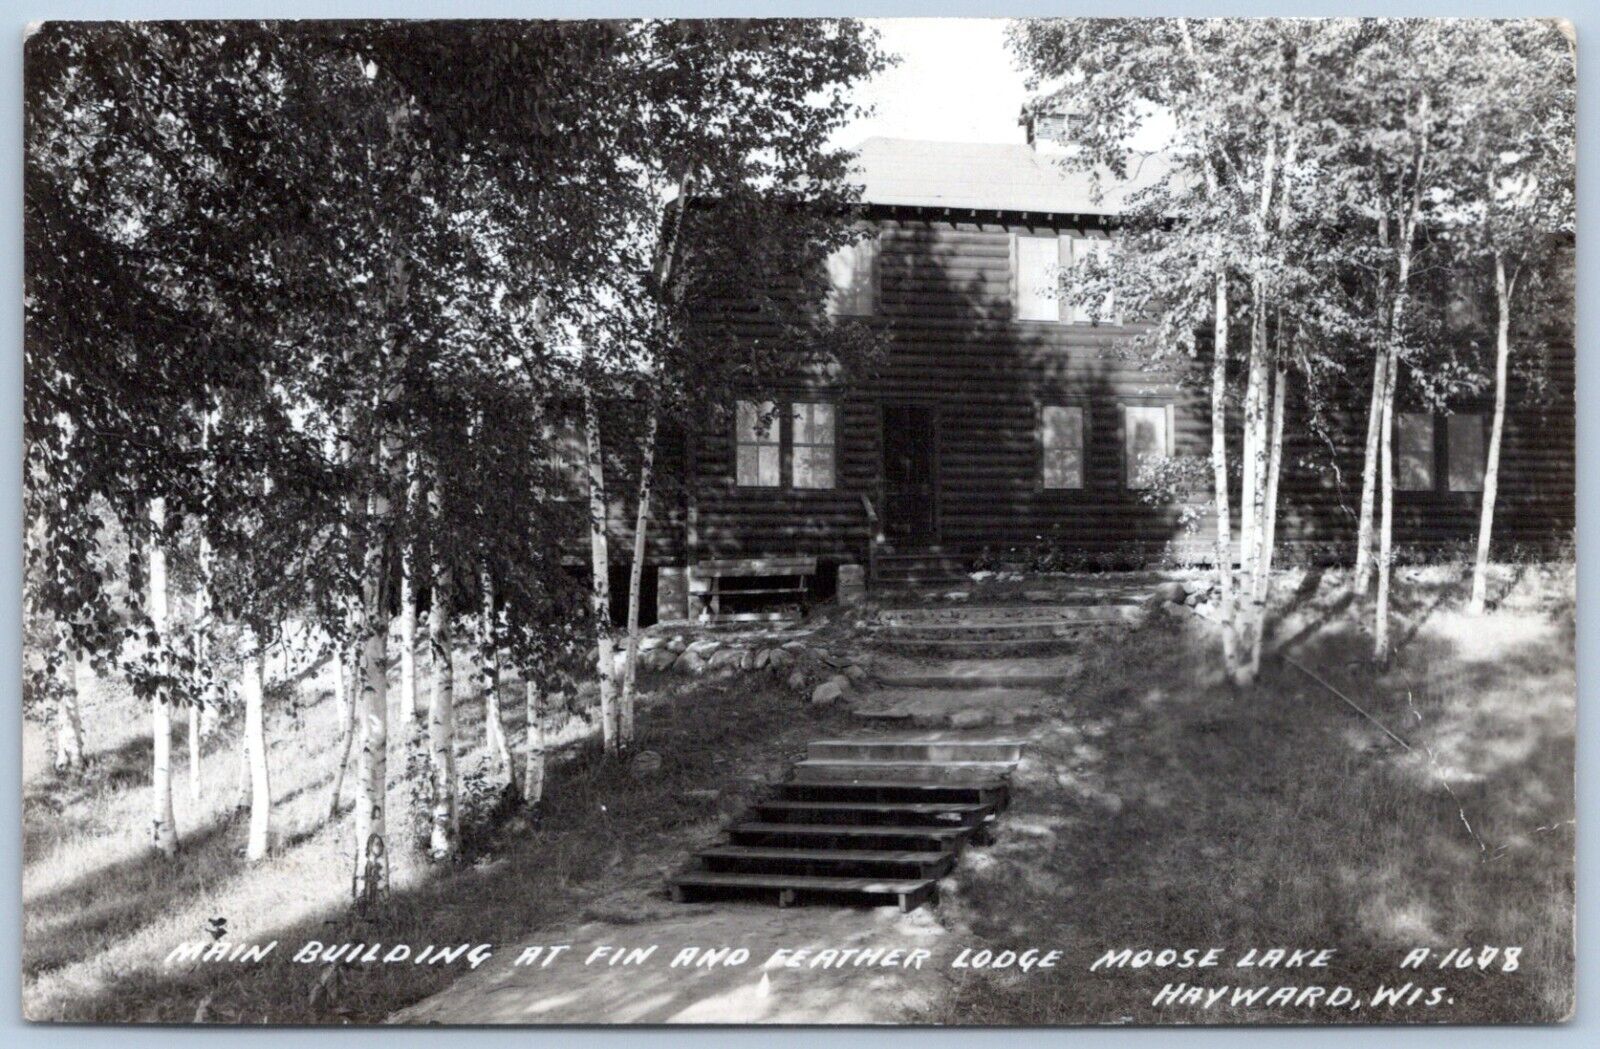 Postcard RPPC Hayward WI Main Building At Fin And Feather Lodge Moose Lake R50